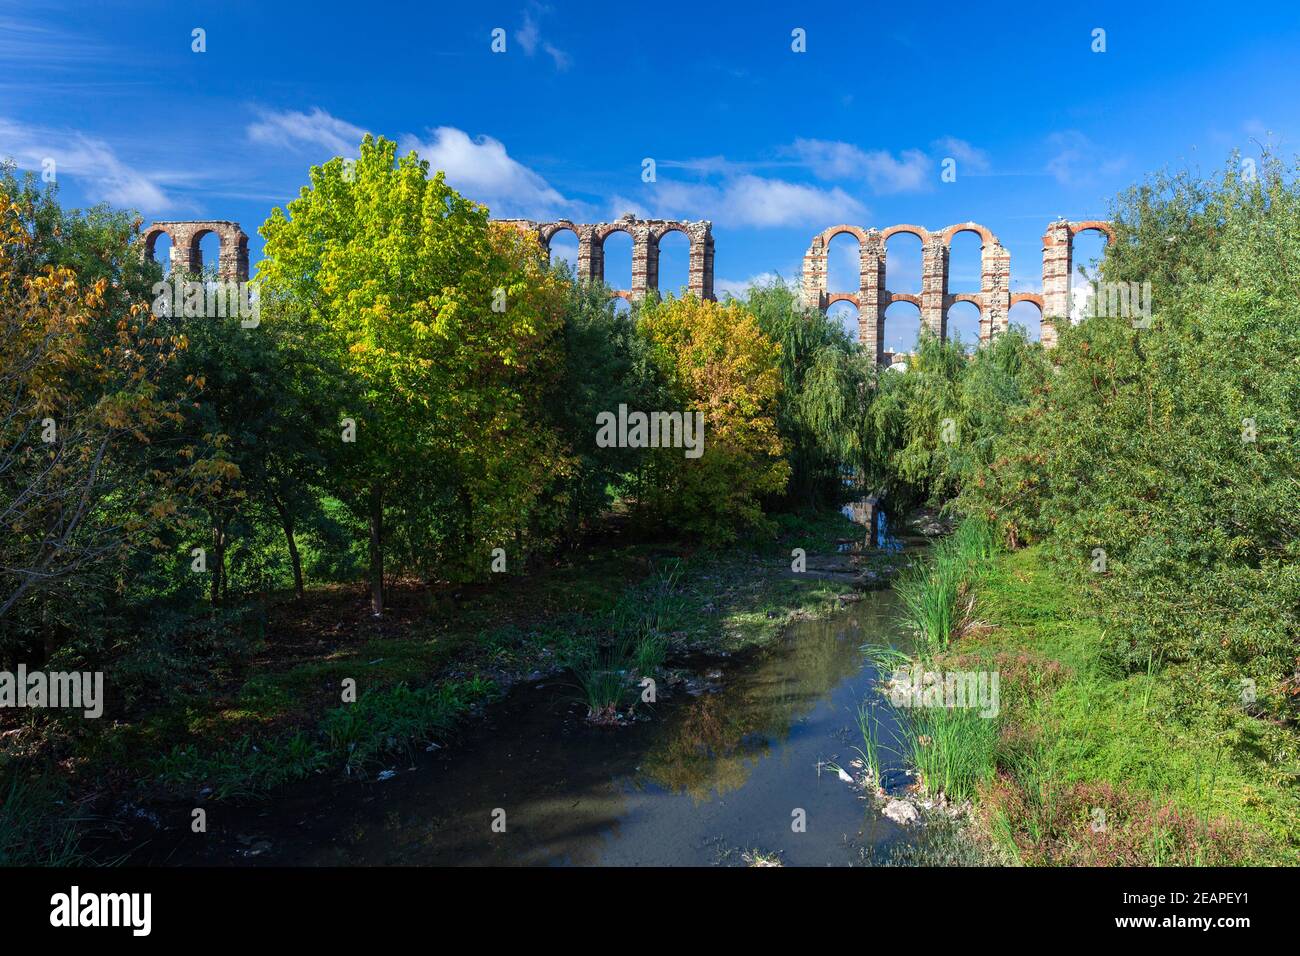 Europe, Espagne, Badajoz, Merida, Acueducto romain de los Milagros ou 'aqueduc miraculeux' traverse l'Arroyo de Albarregas (rivière) Banque D'Images